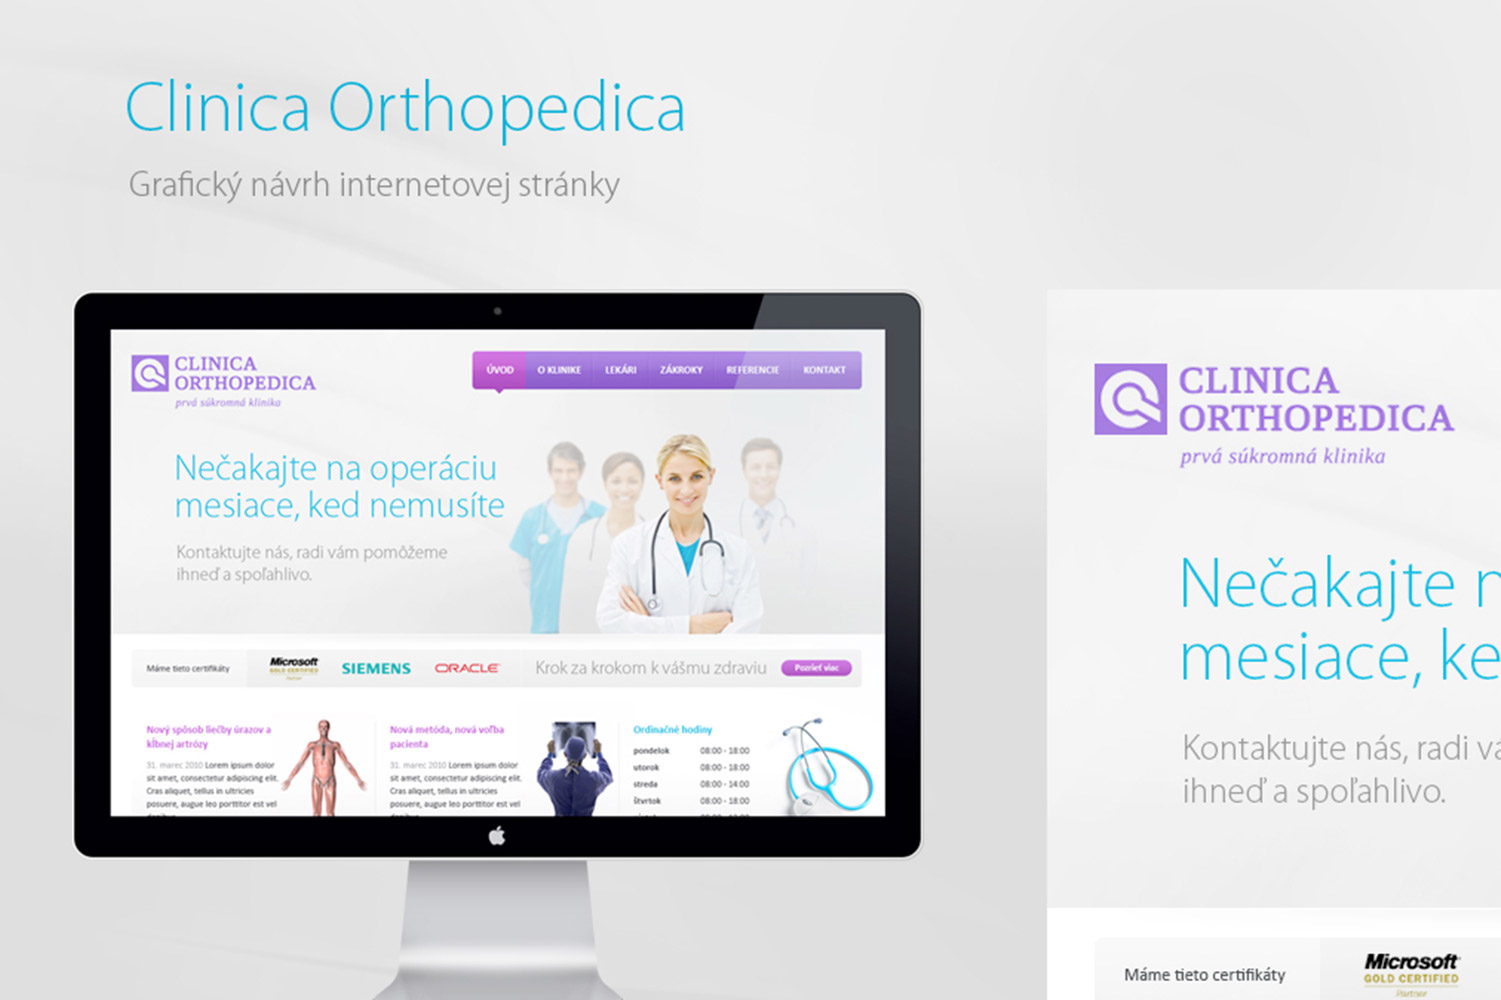 Clinica Orthopedica, Corporate Identity image